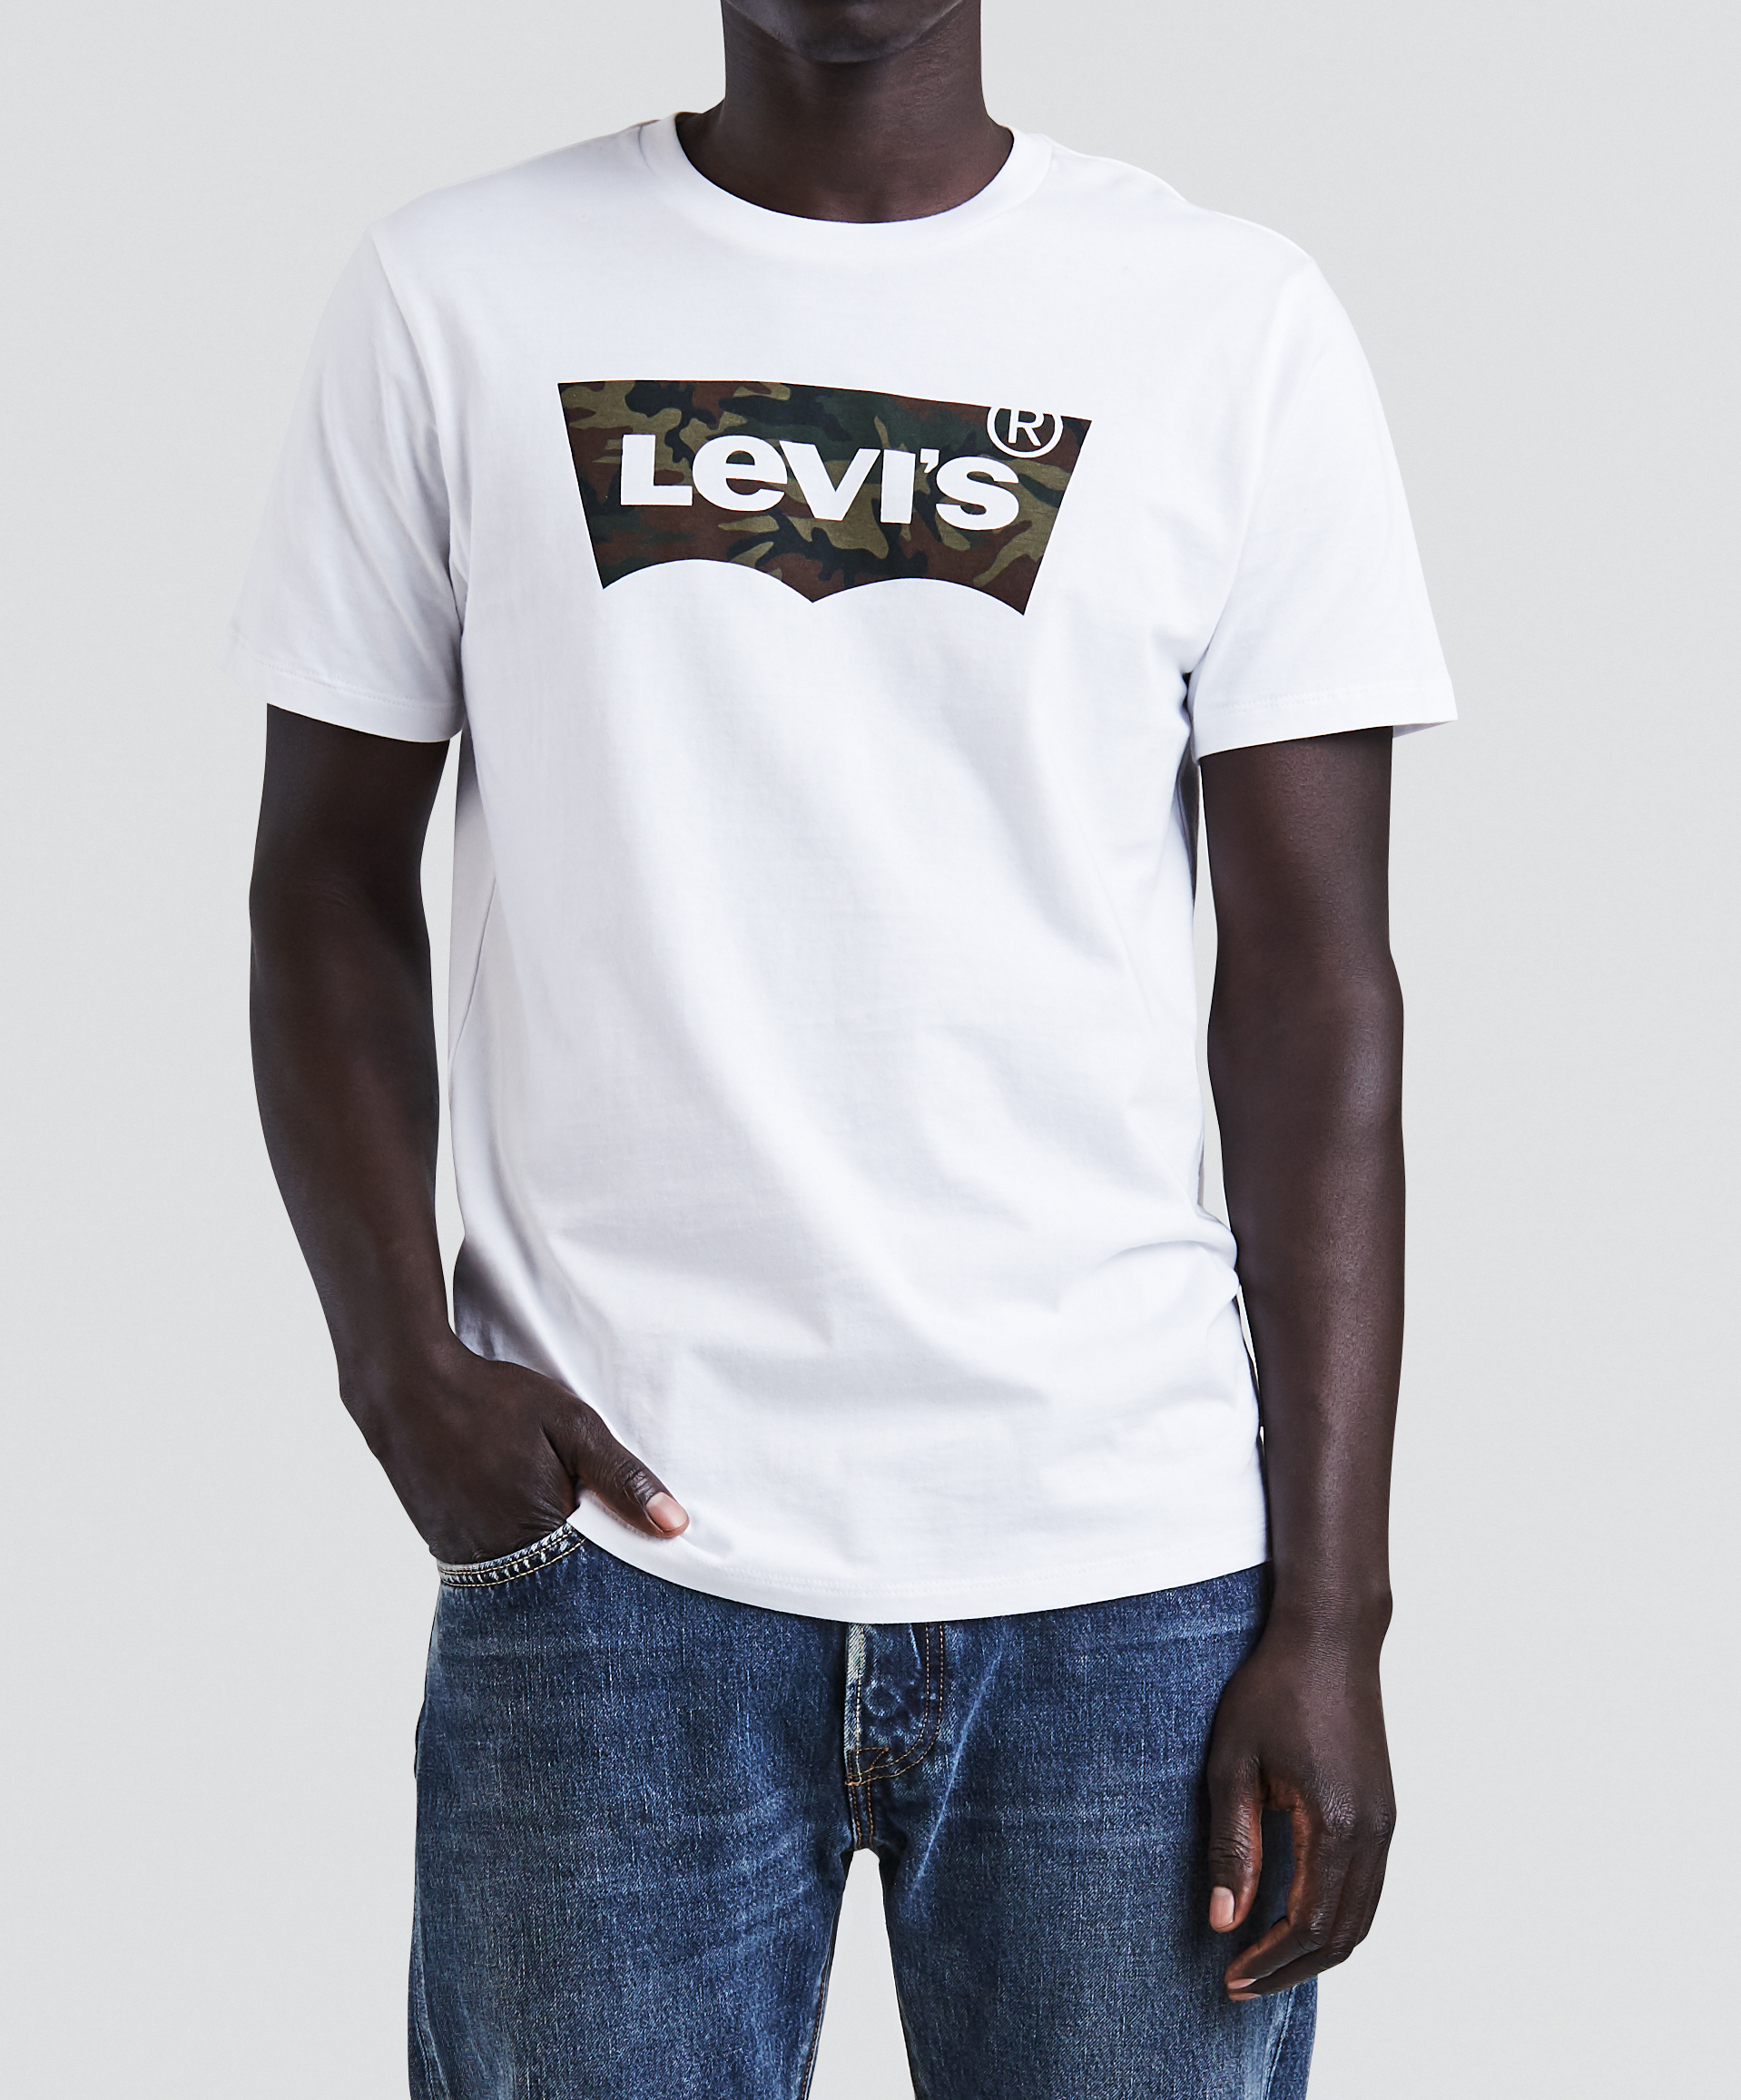 LEVIS Shirts Rundhals T-Shirt 22489-0083 weiss W18-LVT1